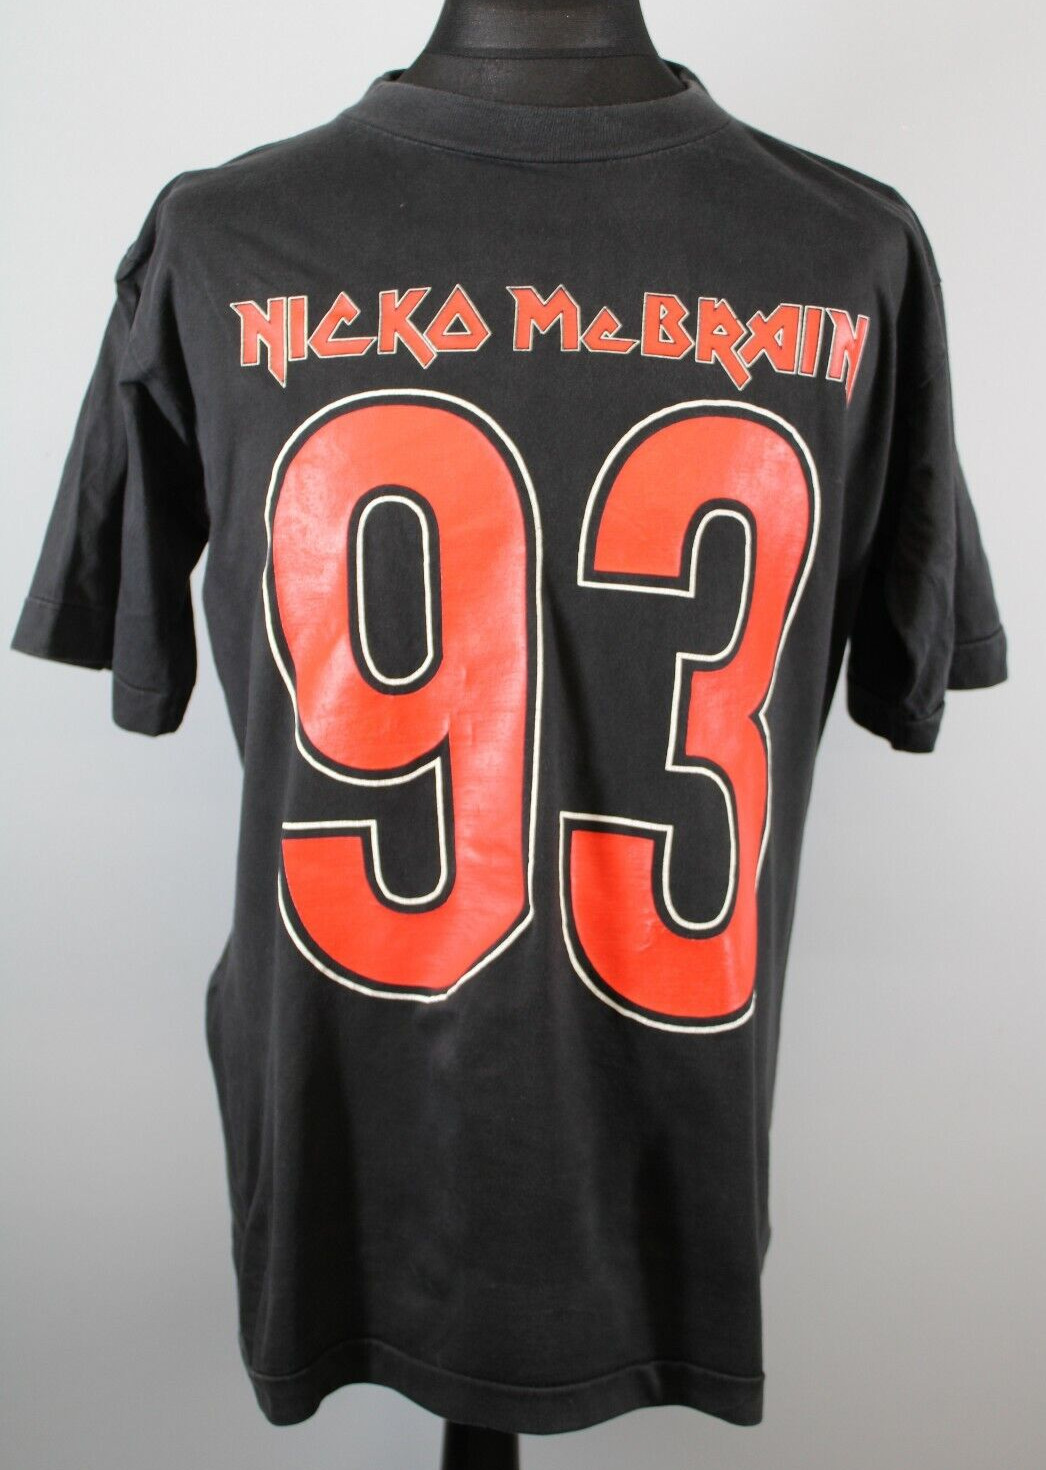 Iron Maiden Shirt Nicko McBrain Official Return Of The Beast UK Tour Oct 1993